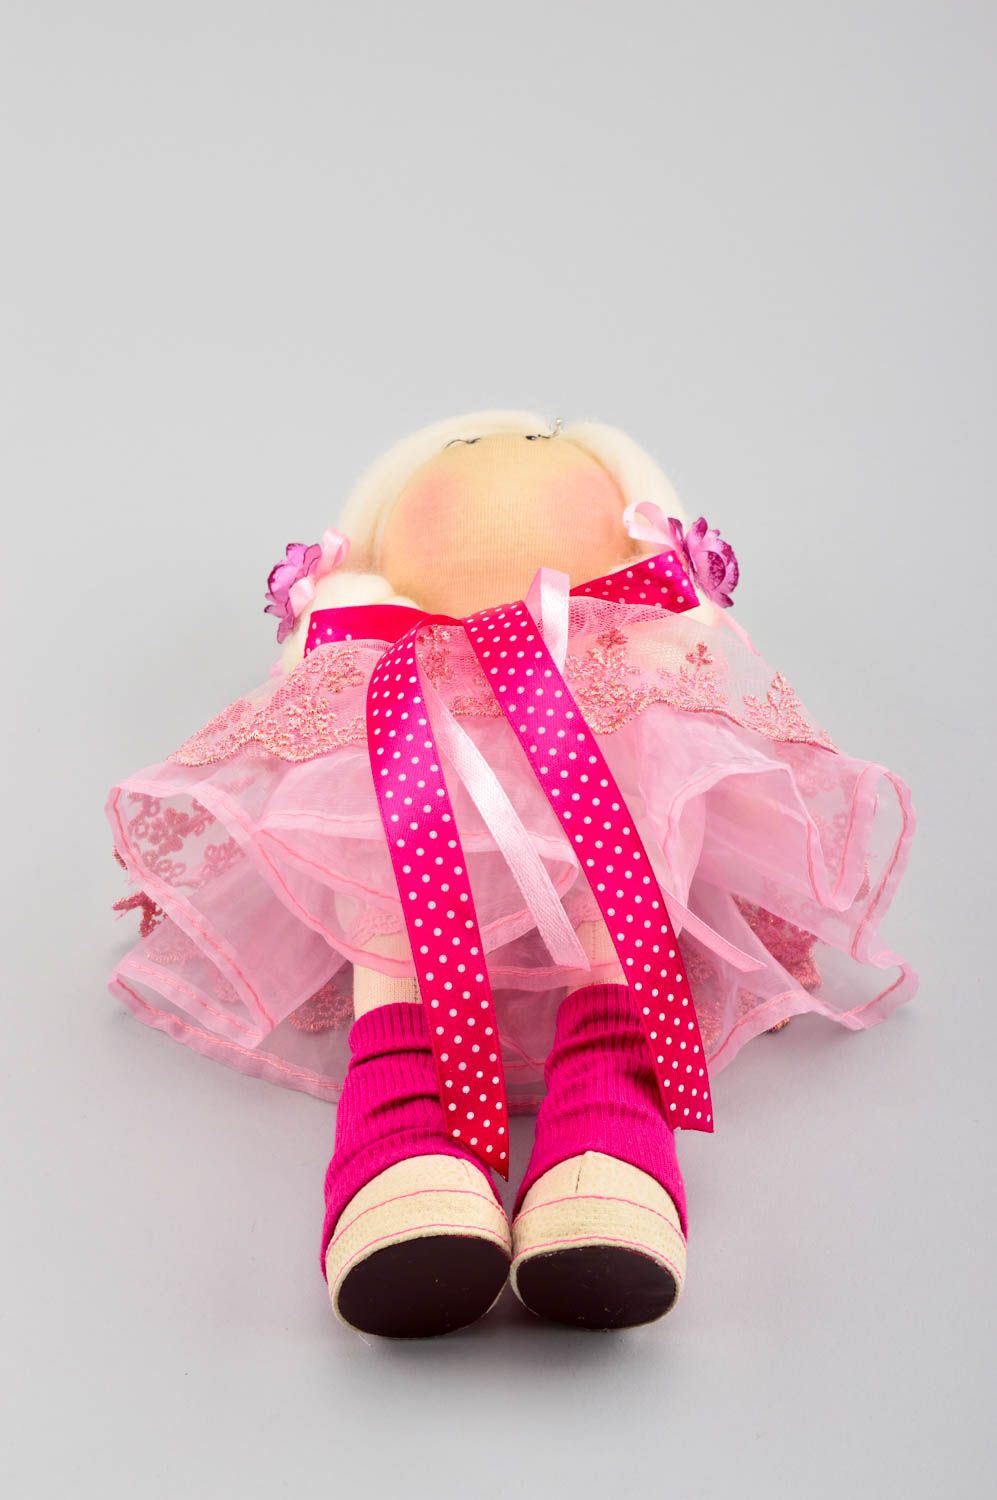 Handmade stylish doll interior doll handmade toys for children nursery decor photo 2